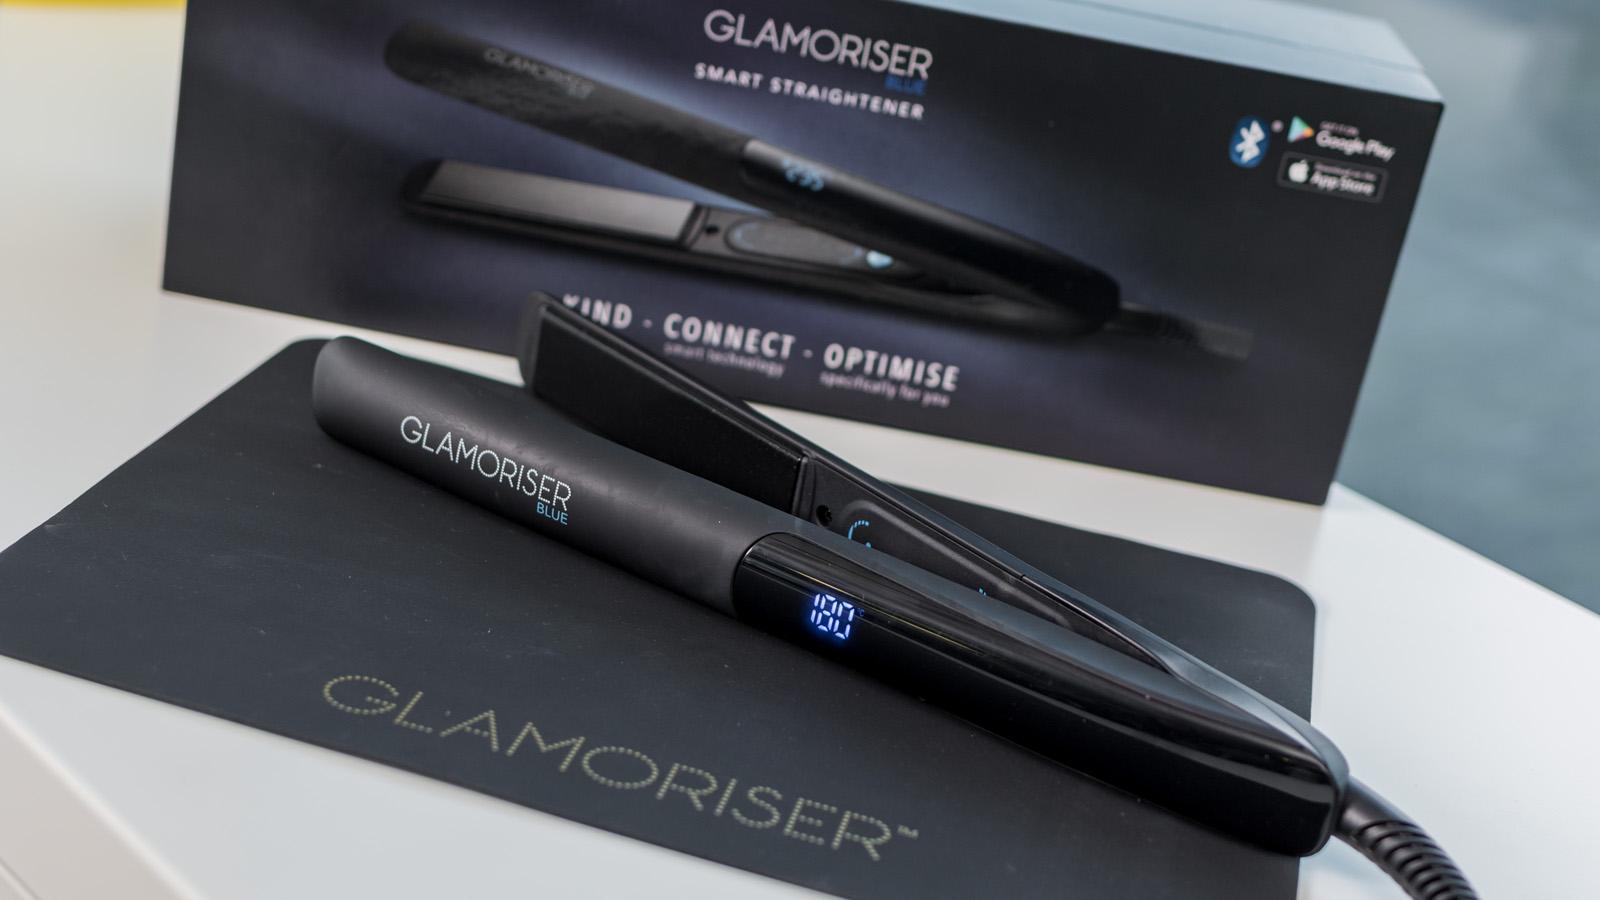   Glamoriser Blue Smart Straightener - Bluetooth ingeschakeld